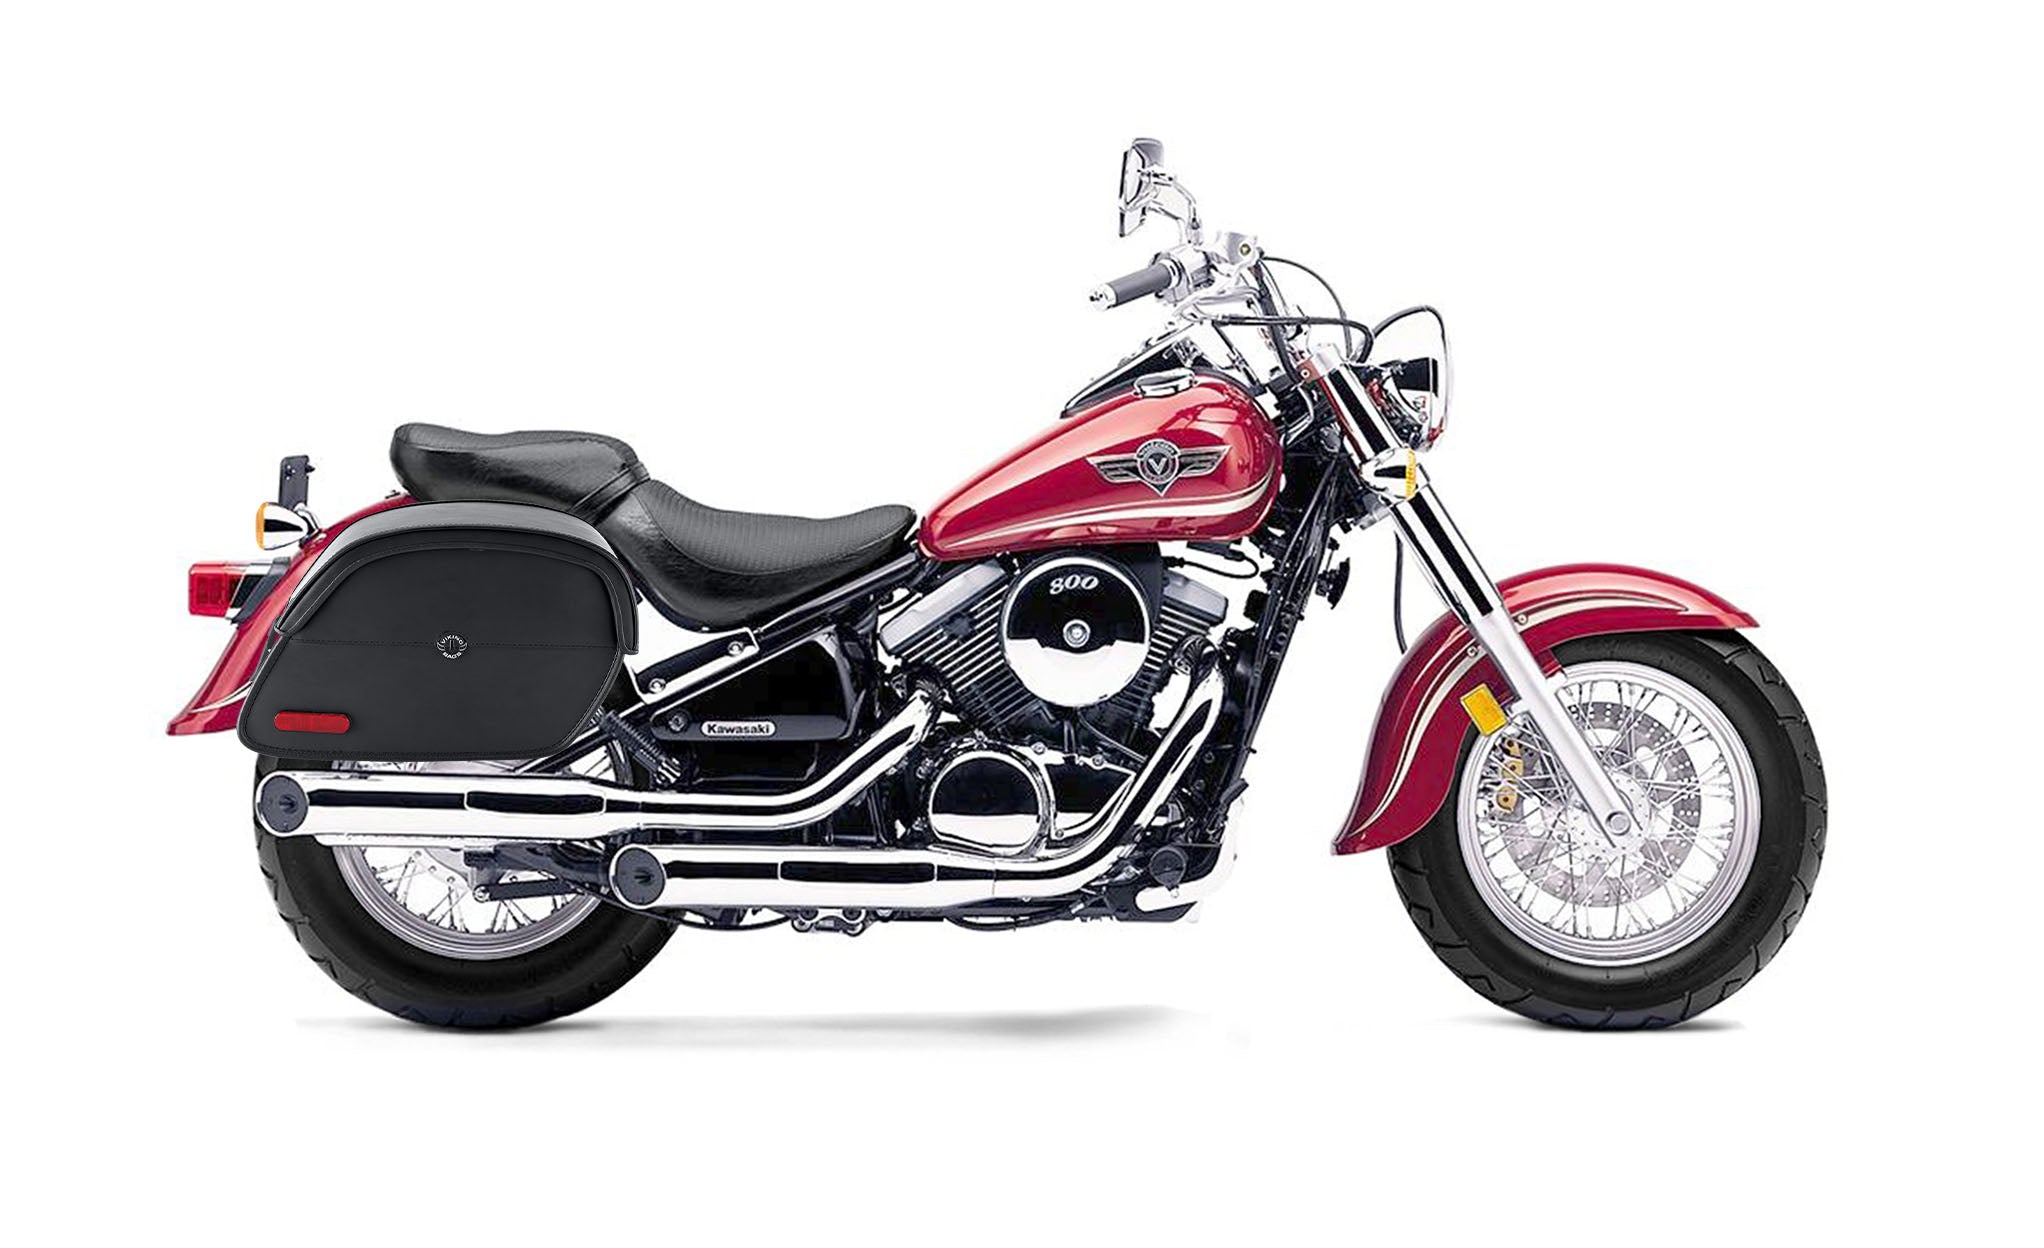 Viking California Large Kawasaki Vulcan 800 Classic Leather Motorcycle Saddlebags on Bike Photo @expand